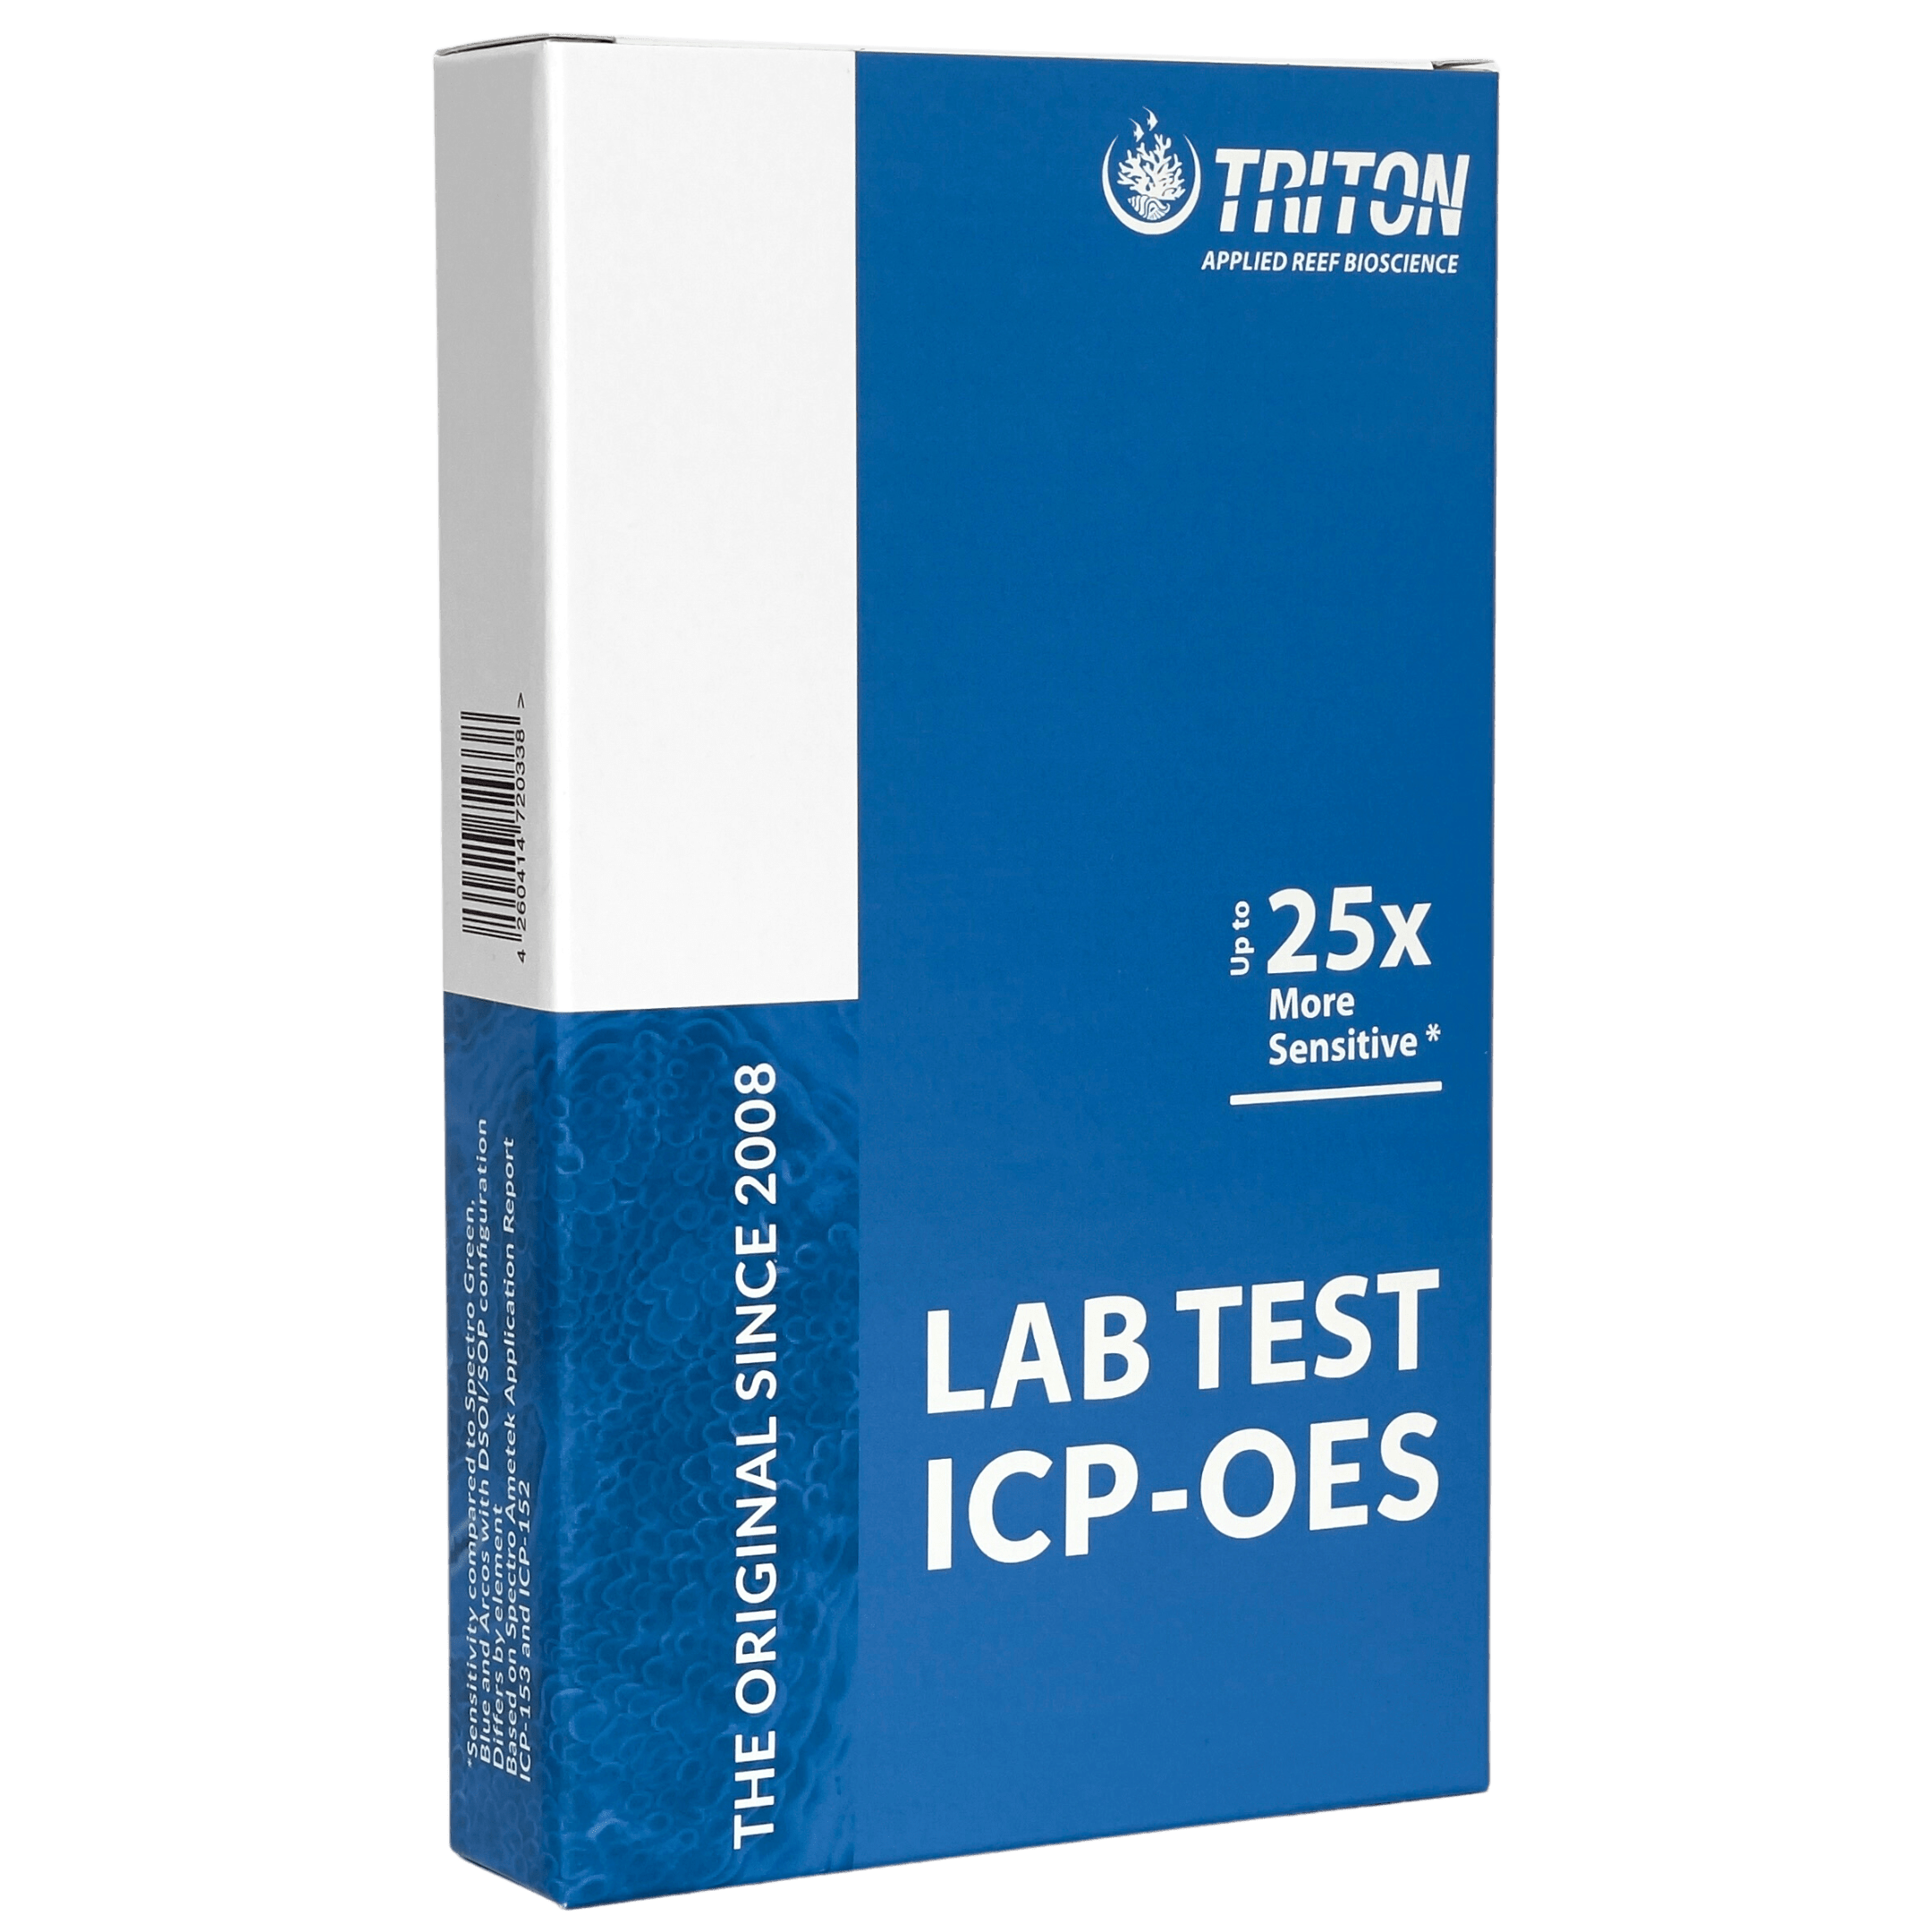 Triton ICP Test Kissenverpackung Frontansicht.